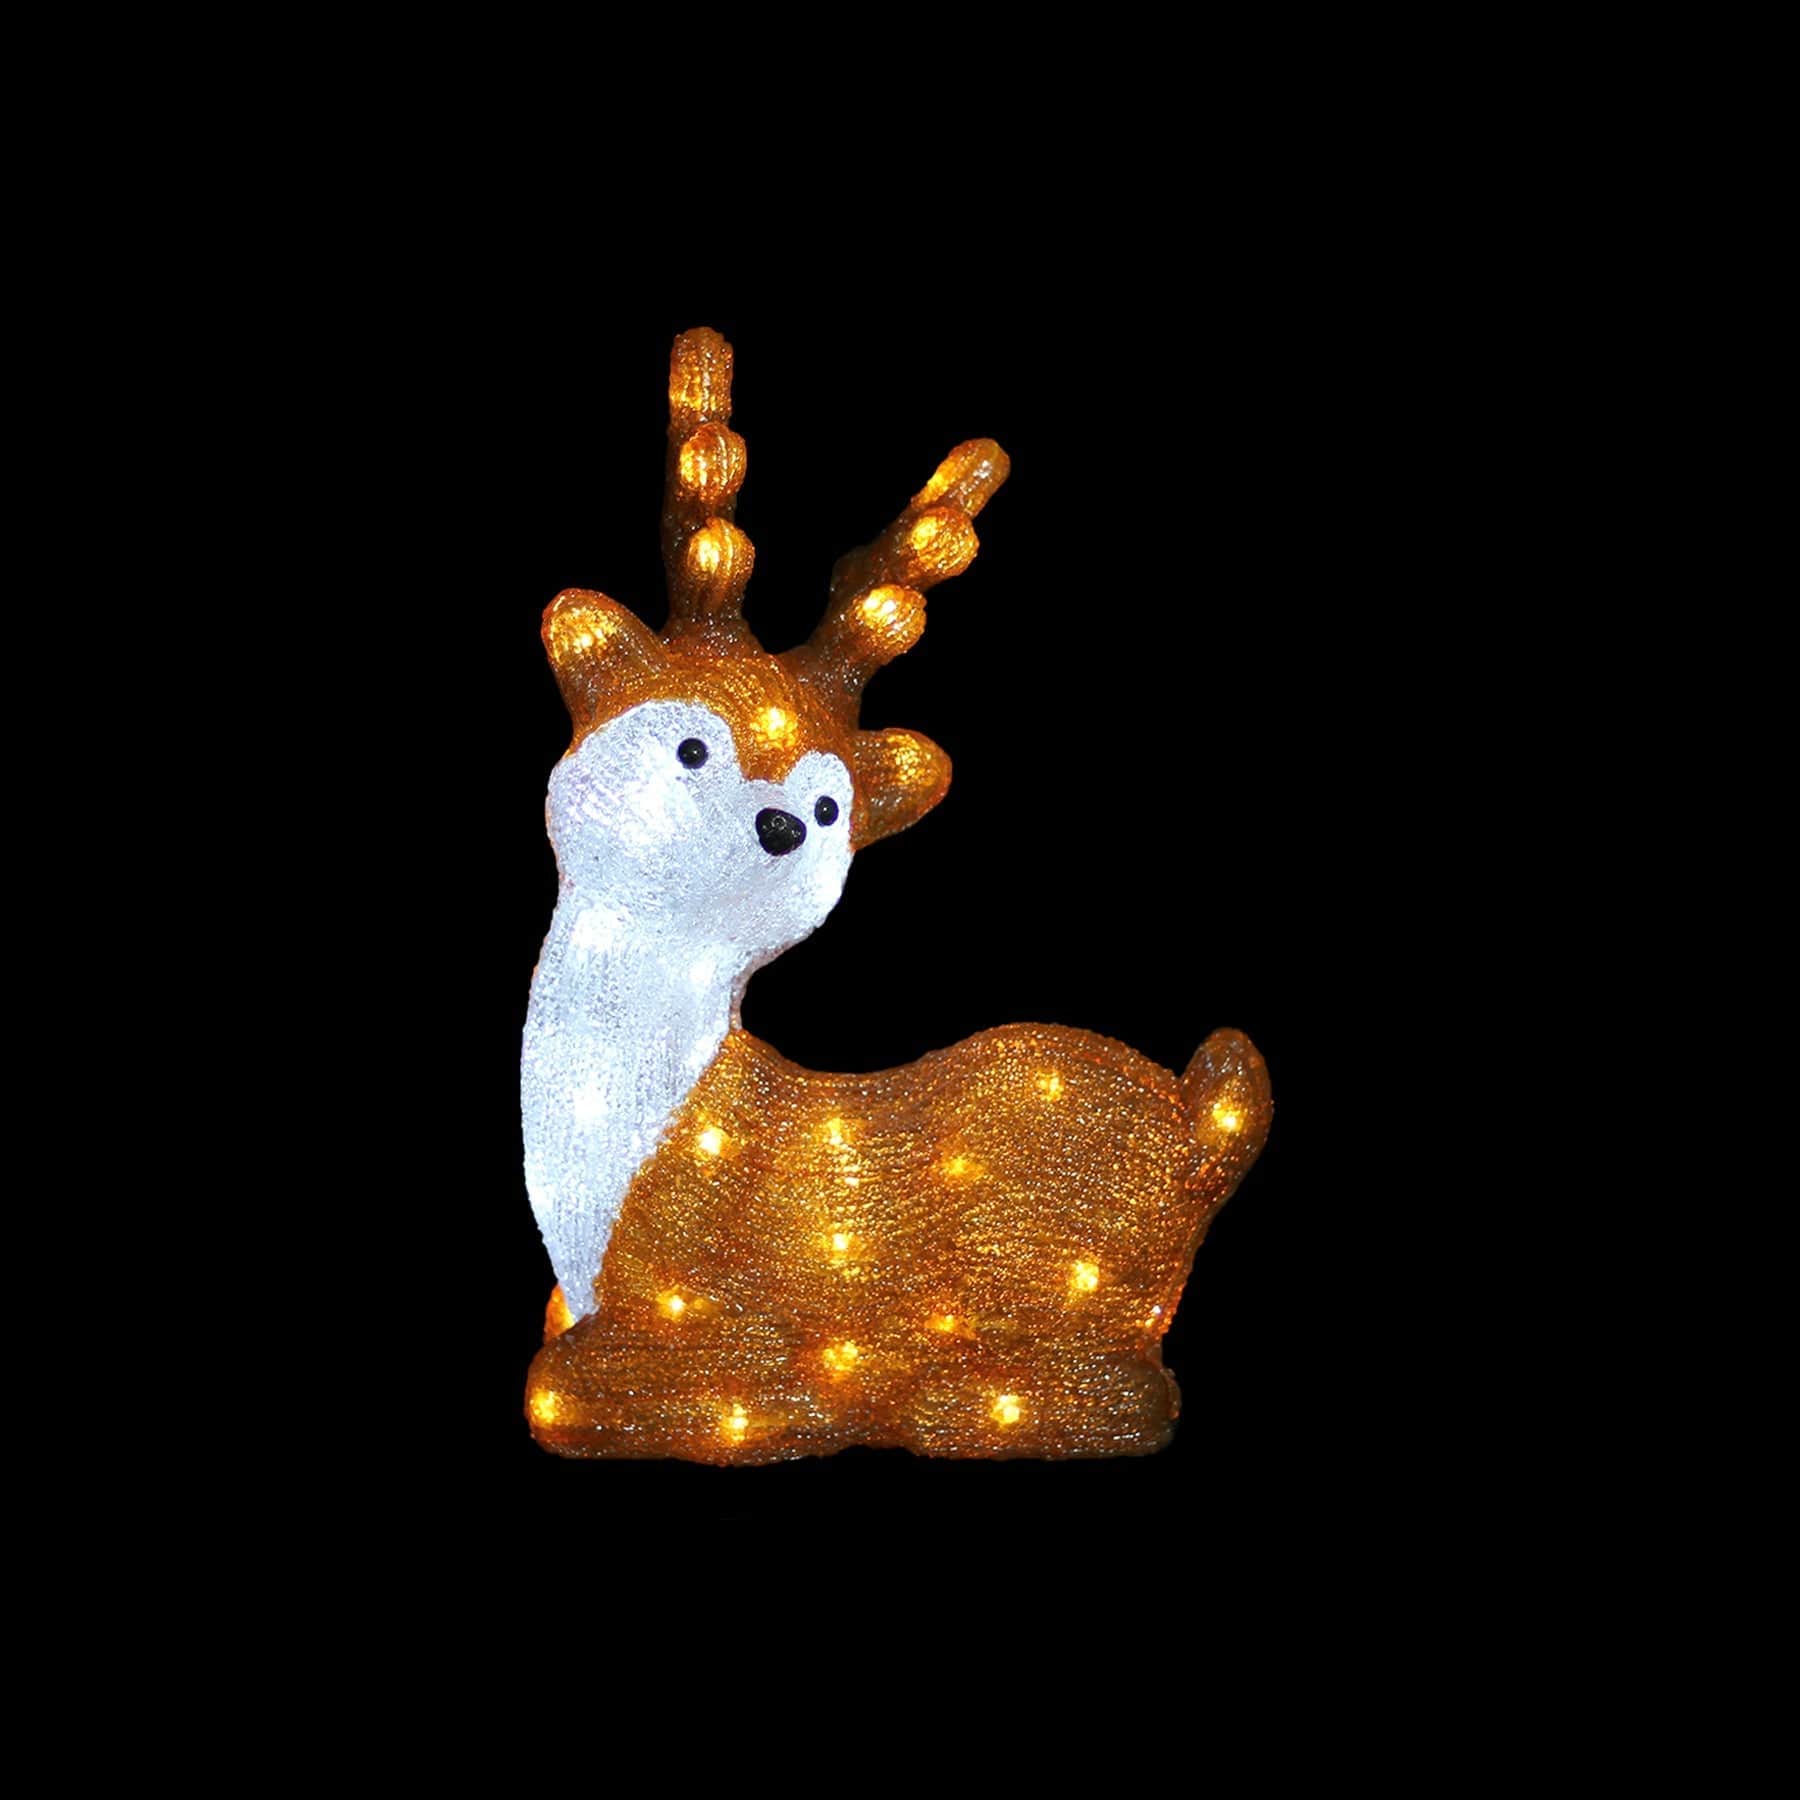 Promo Christmas Figure Acrylic Sitting Cute Reindeer - H40cm ACY024-P